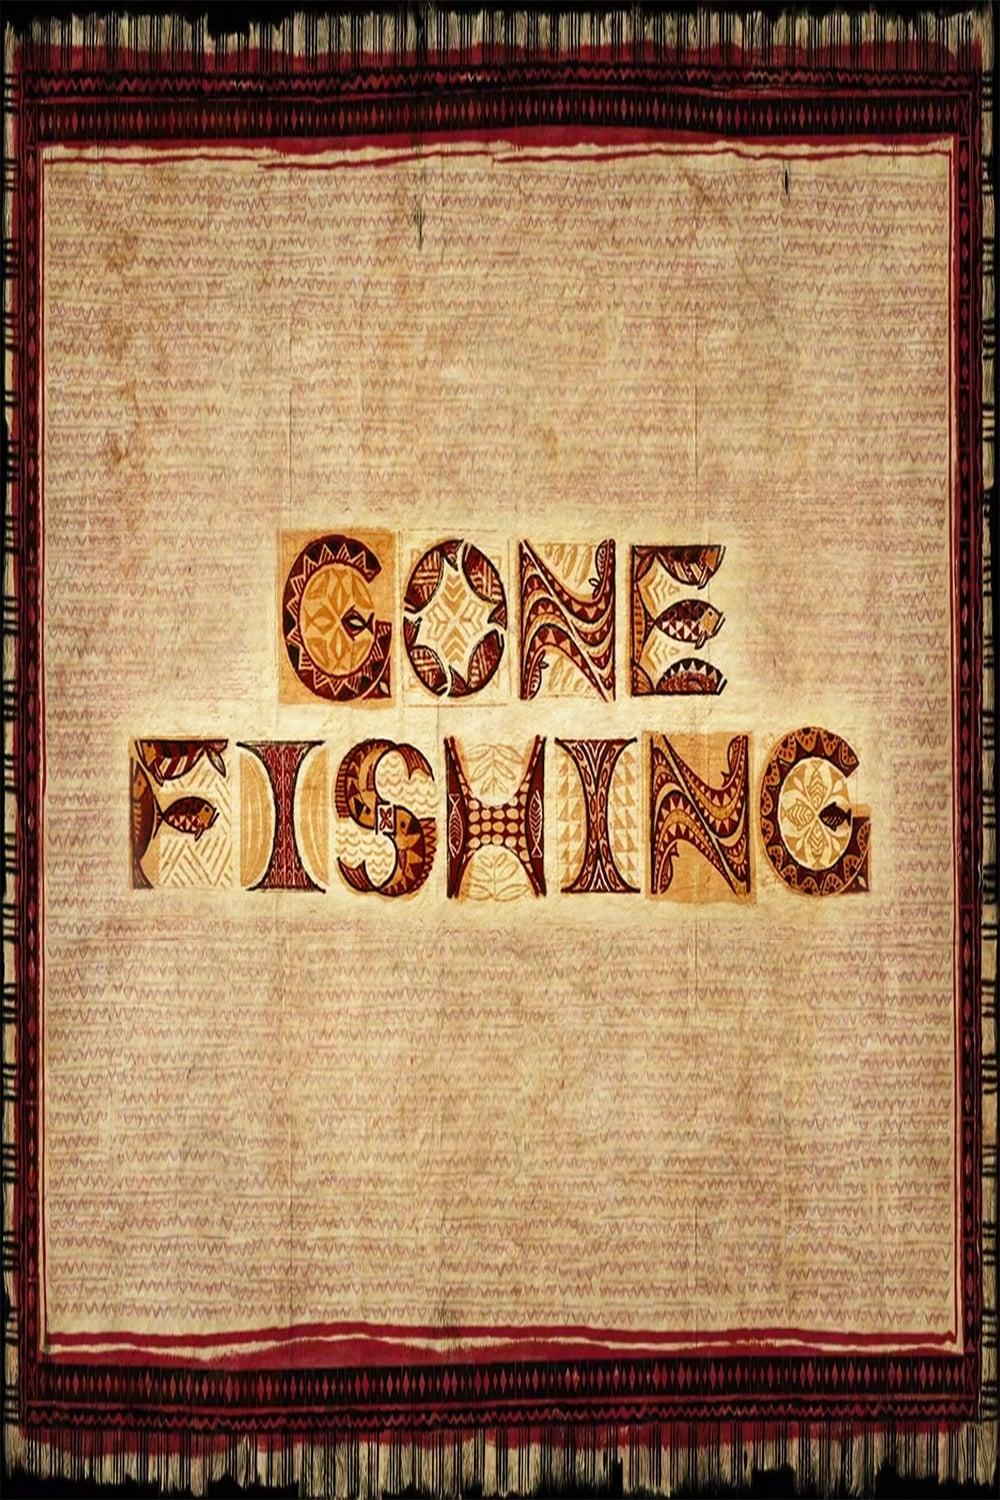 Gone Fishing poster